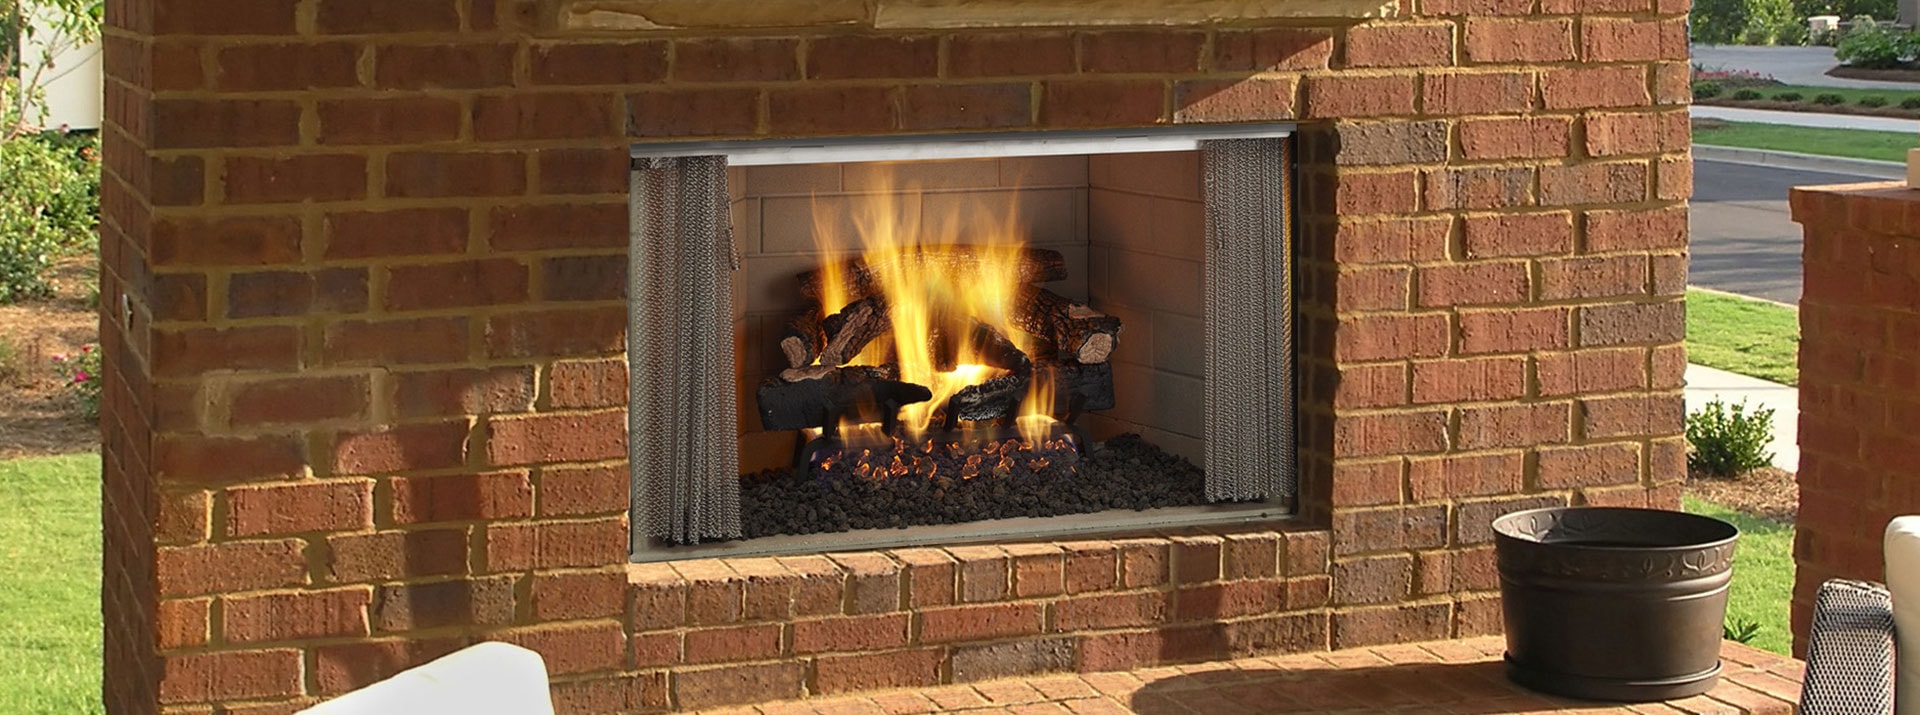 How to Install Fireplace Doors Beautiful Villawood Wood Burning Outdoor Fireplace